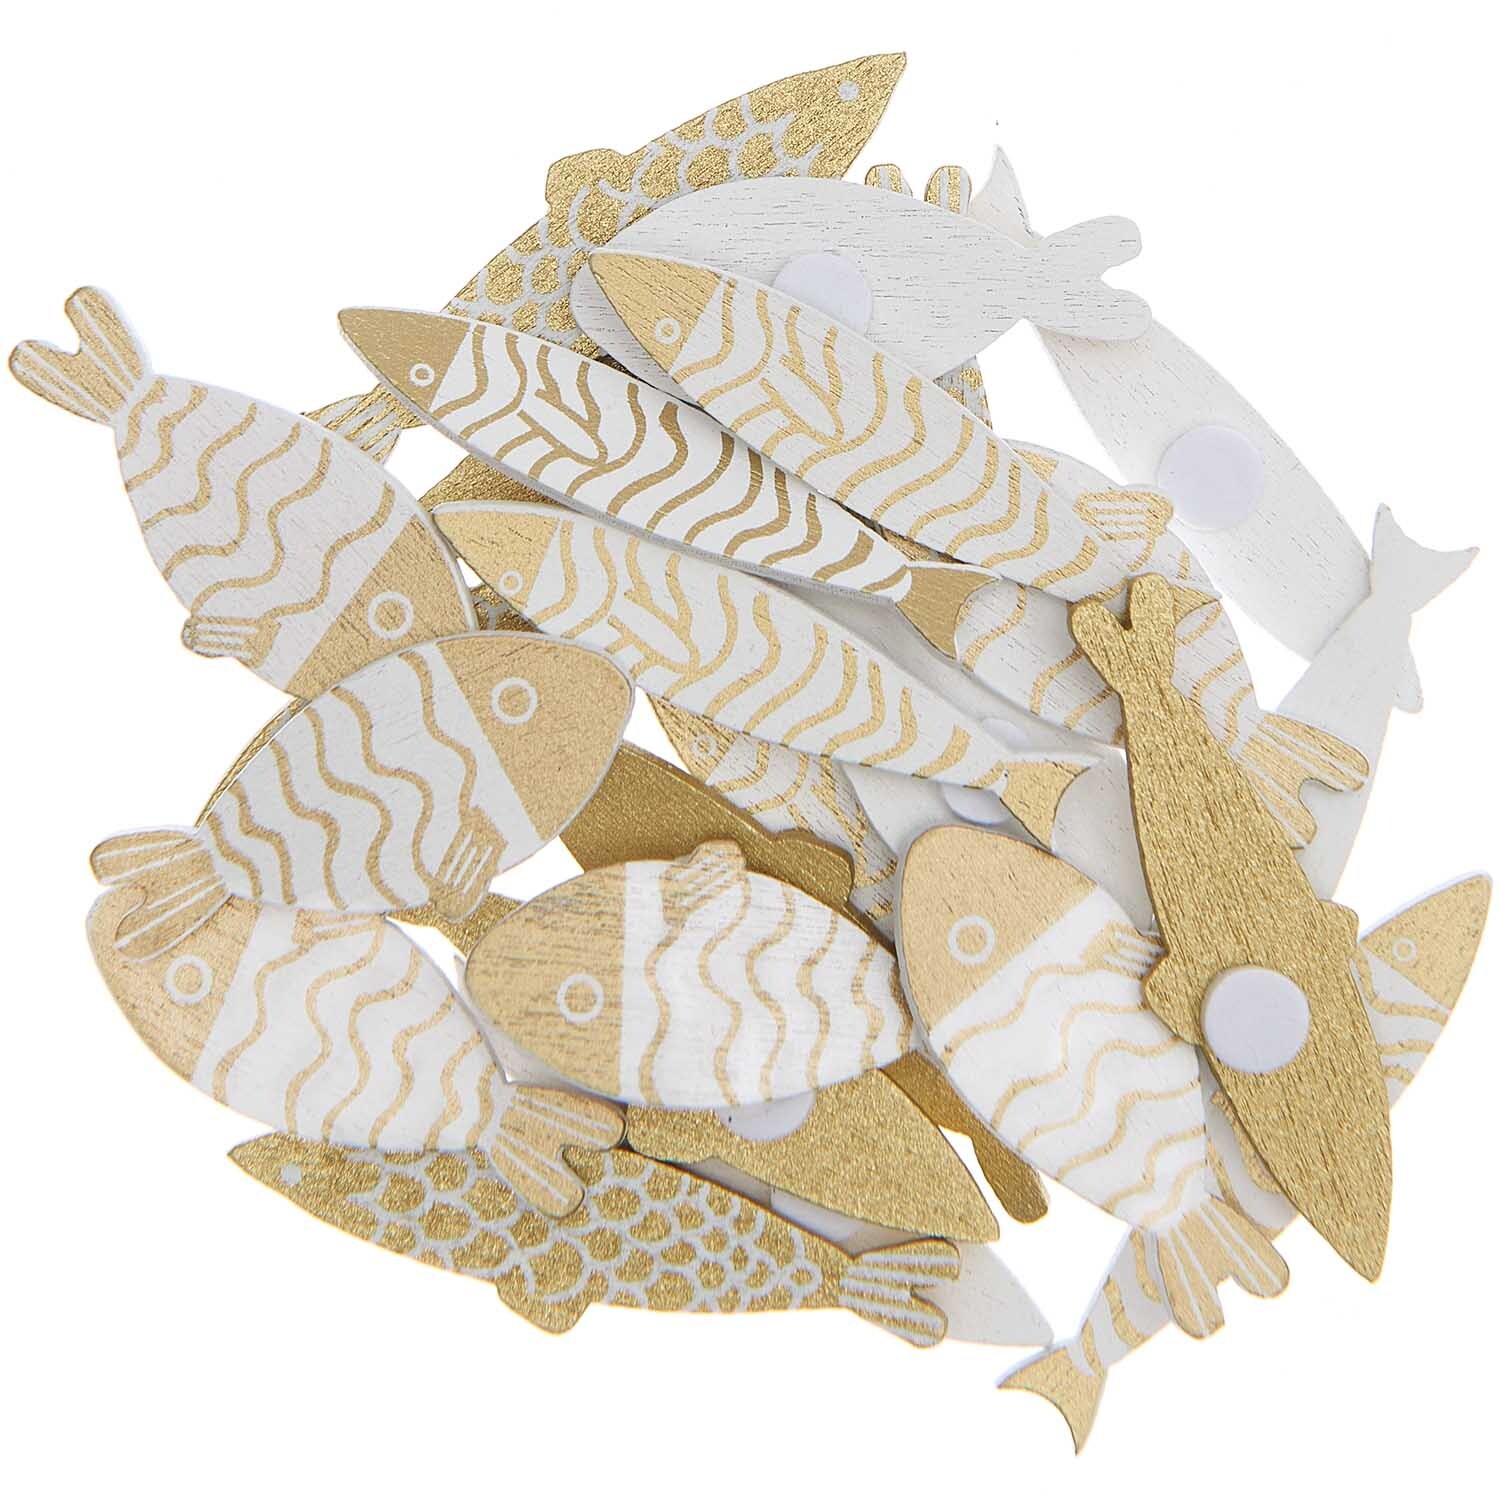 Holzsticker Fisch Mix gold-weiß 24 Stück